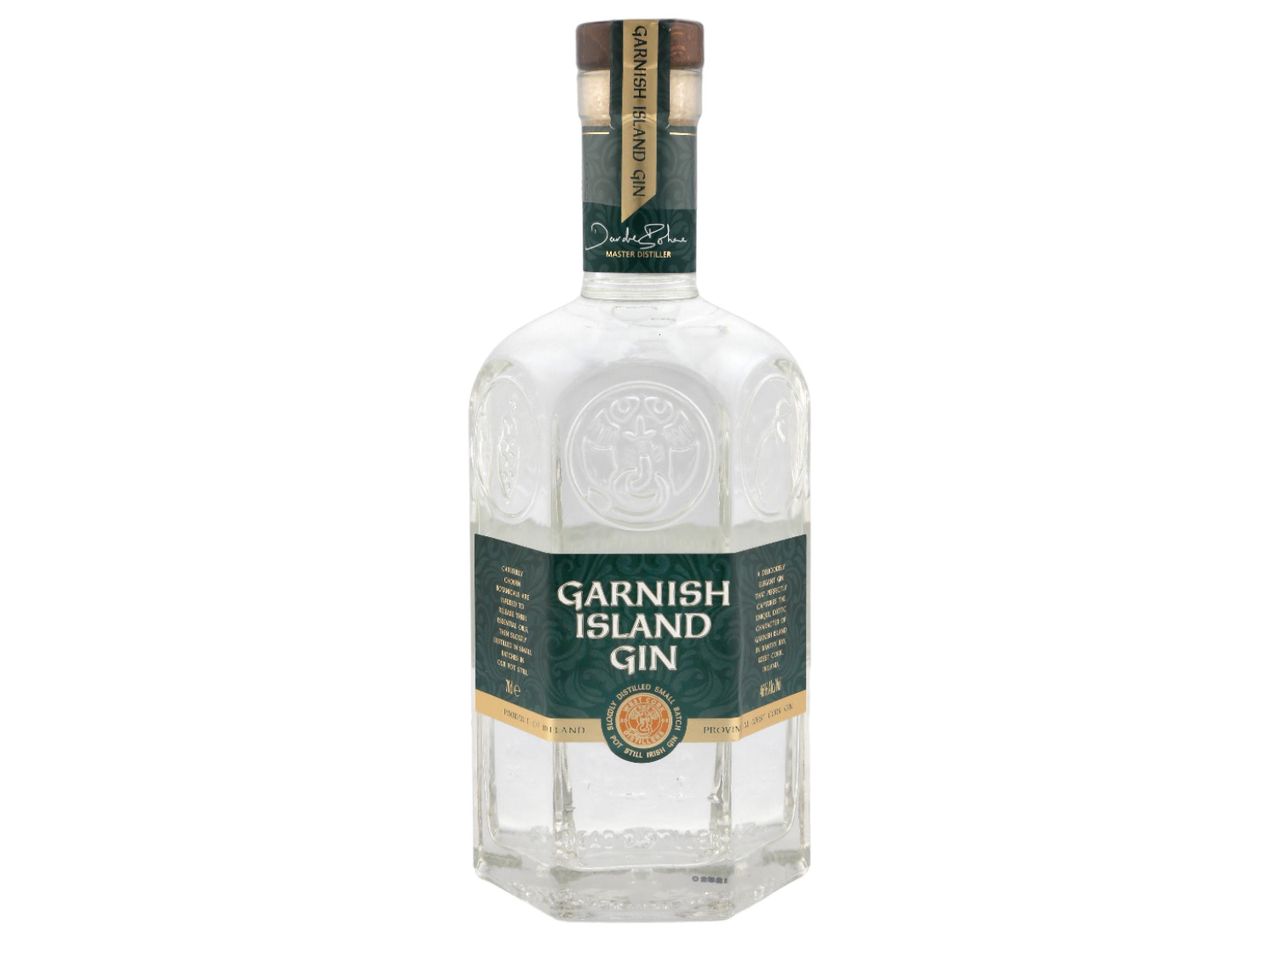 Go to full screen view: Garnish Island Gin 46% - Image 1